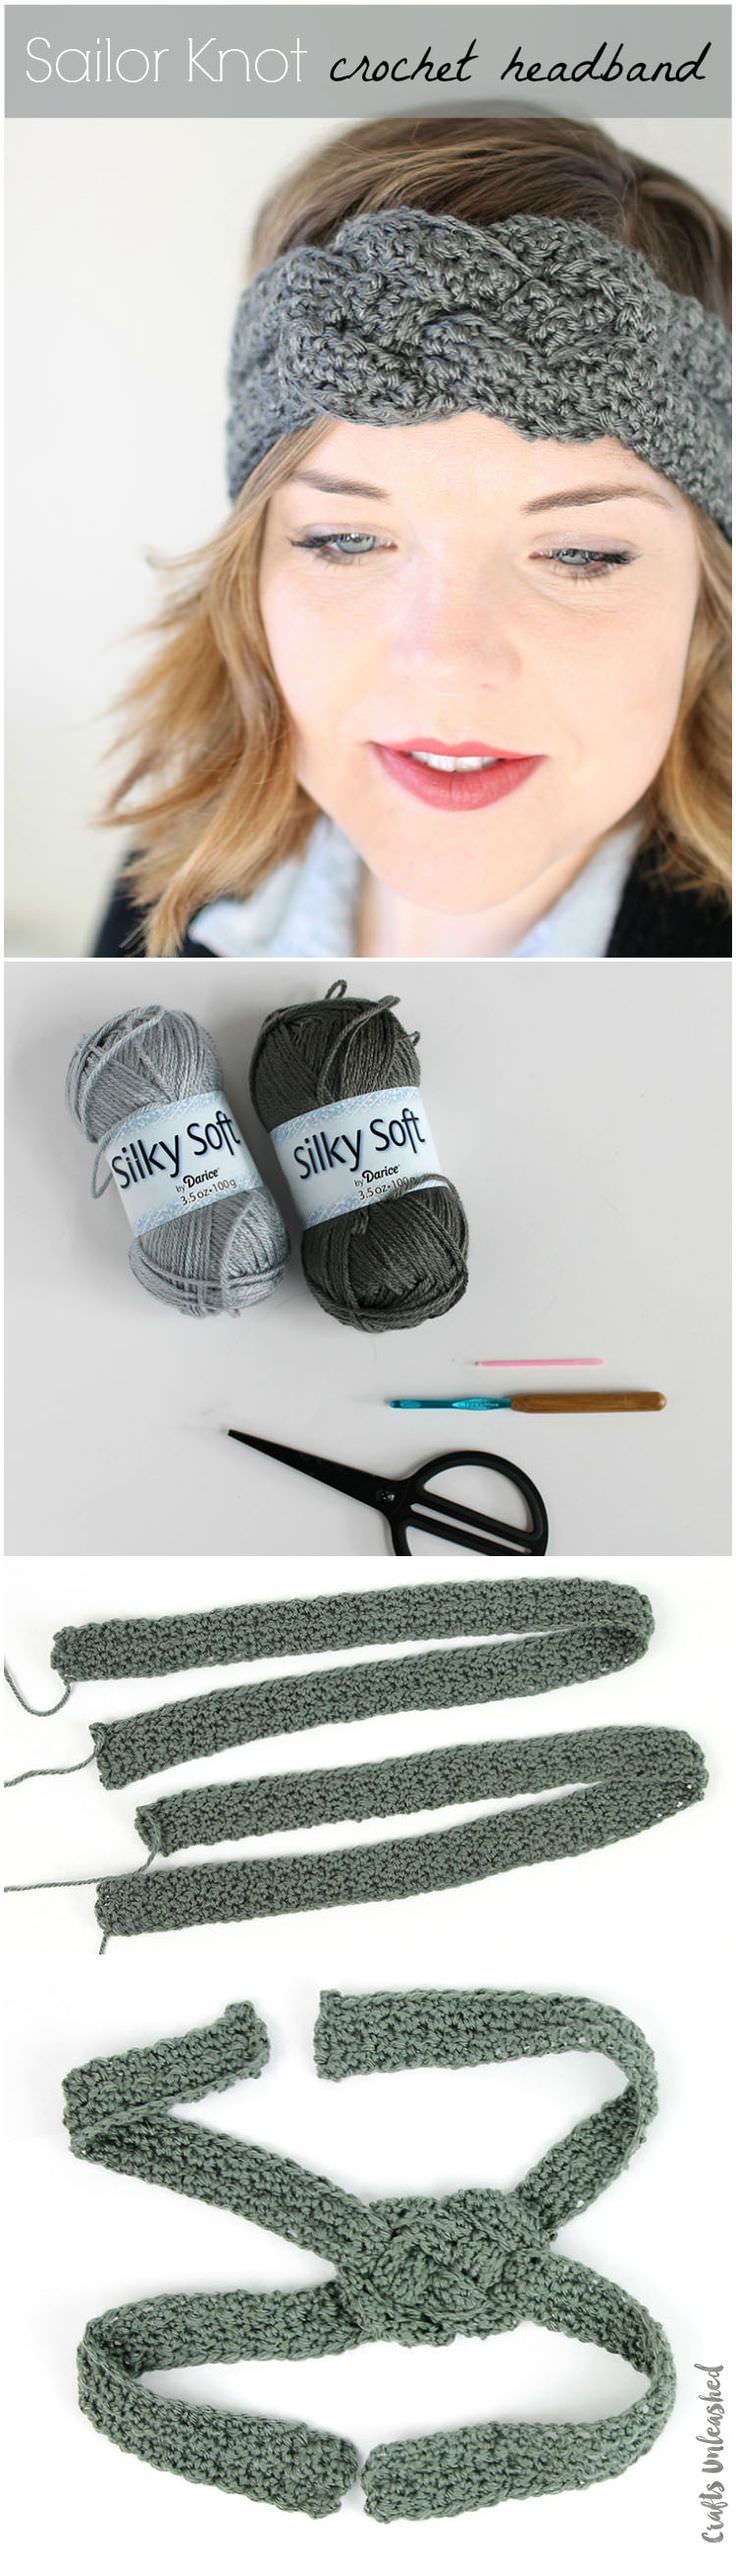 sailor-knot-crochet-headband-pattern